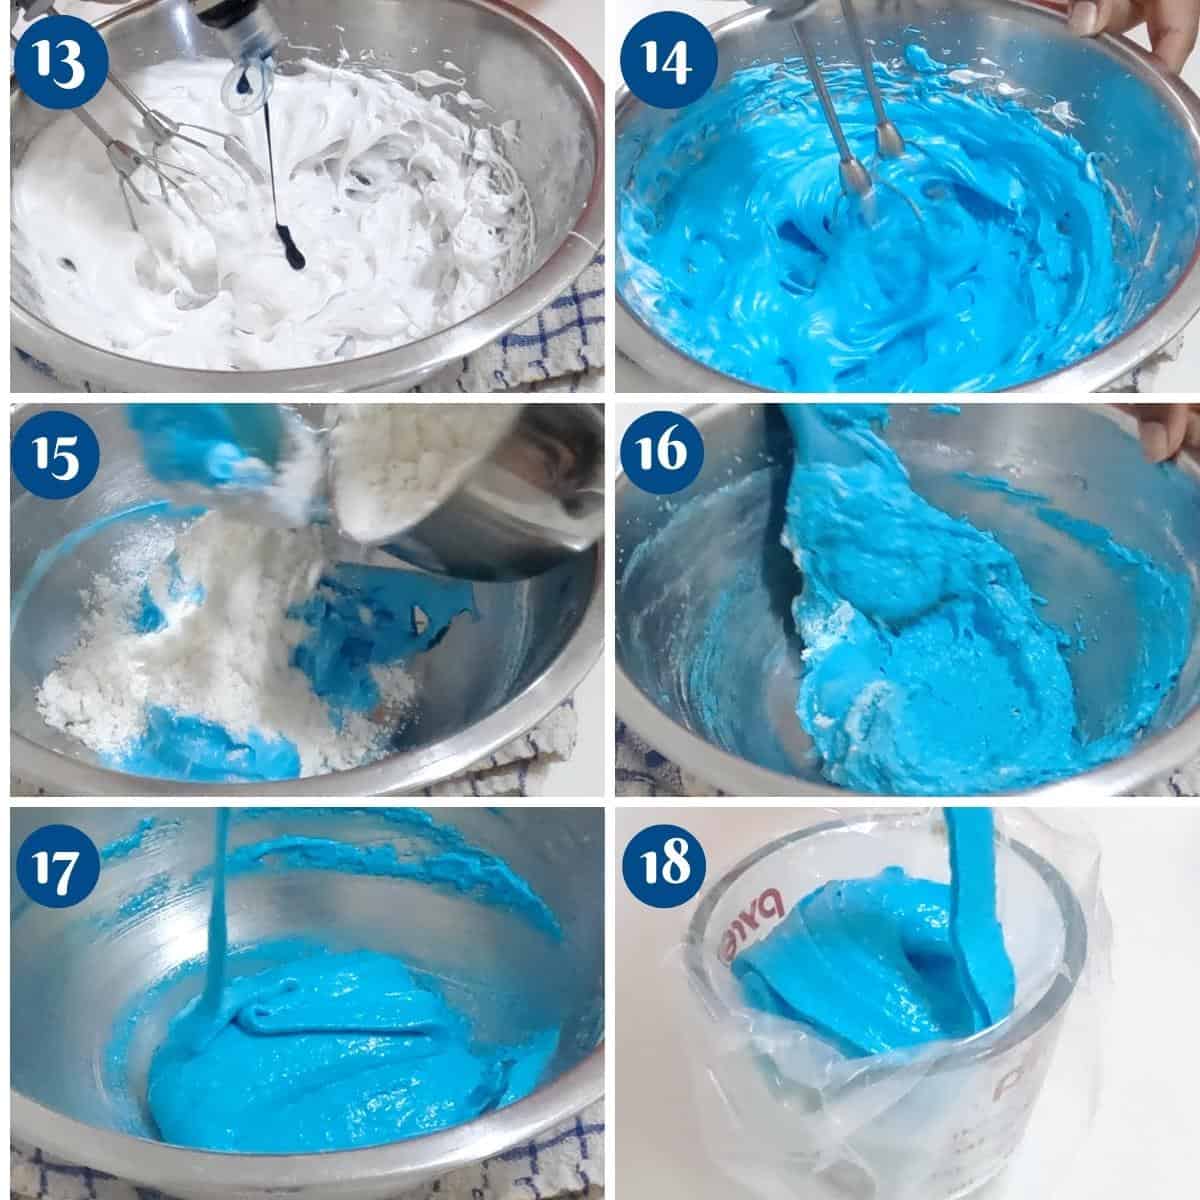 Progress pictures making blue macaron batter.